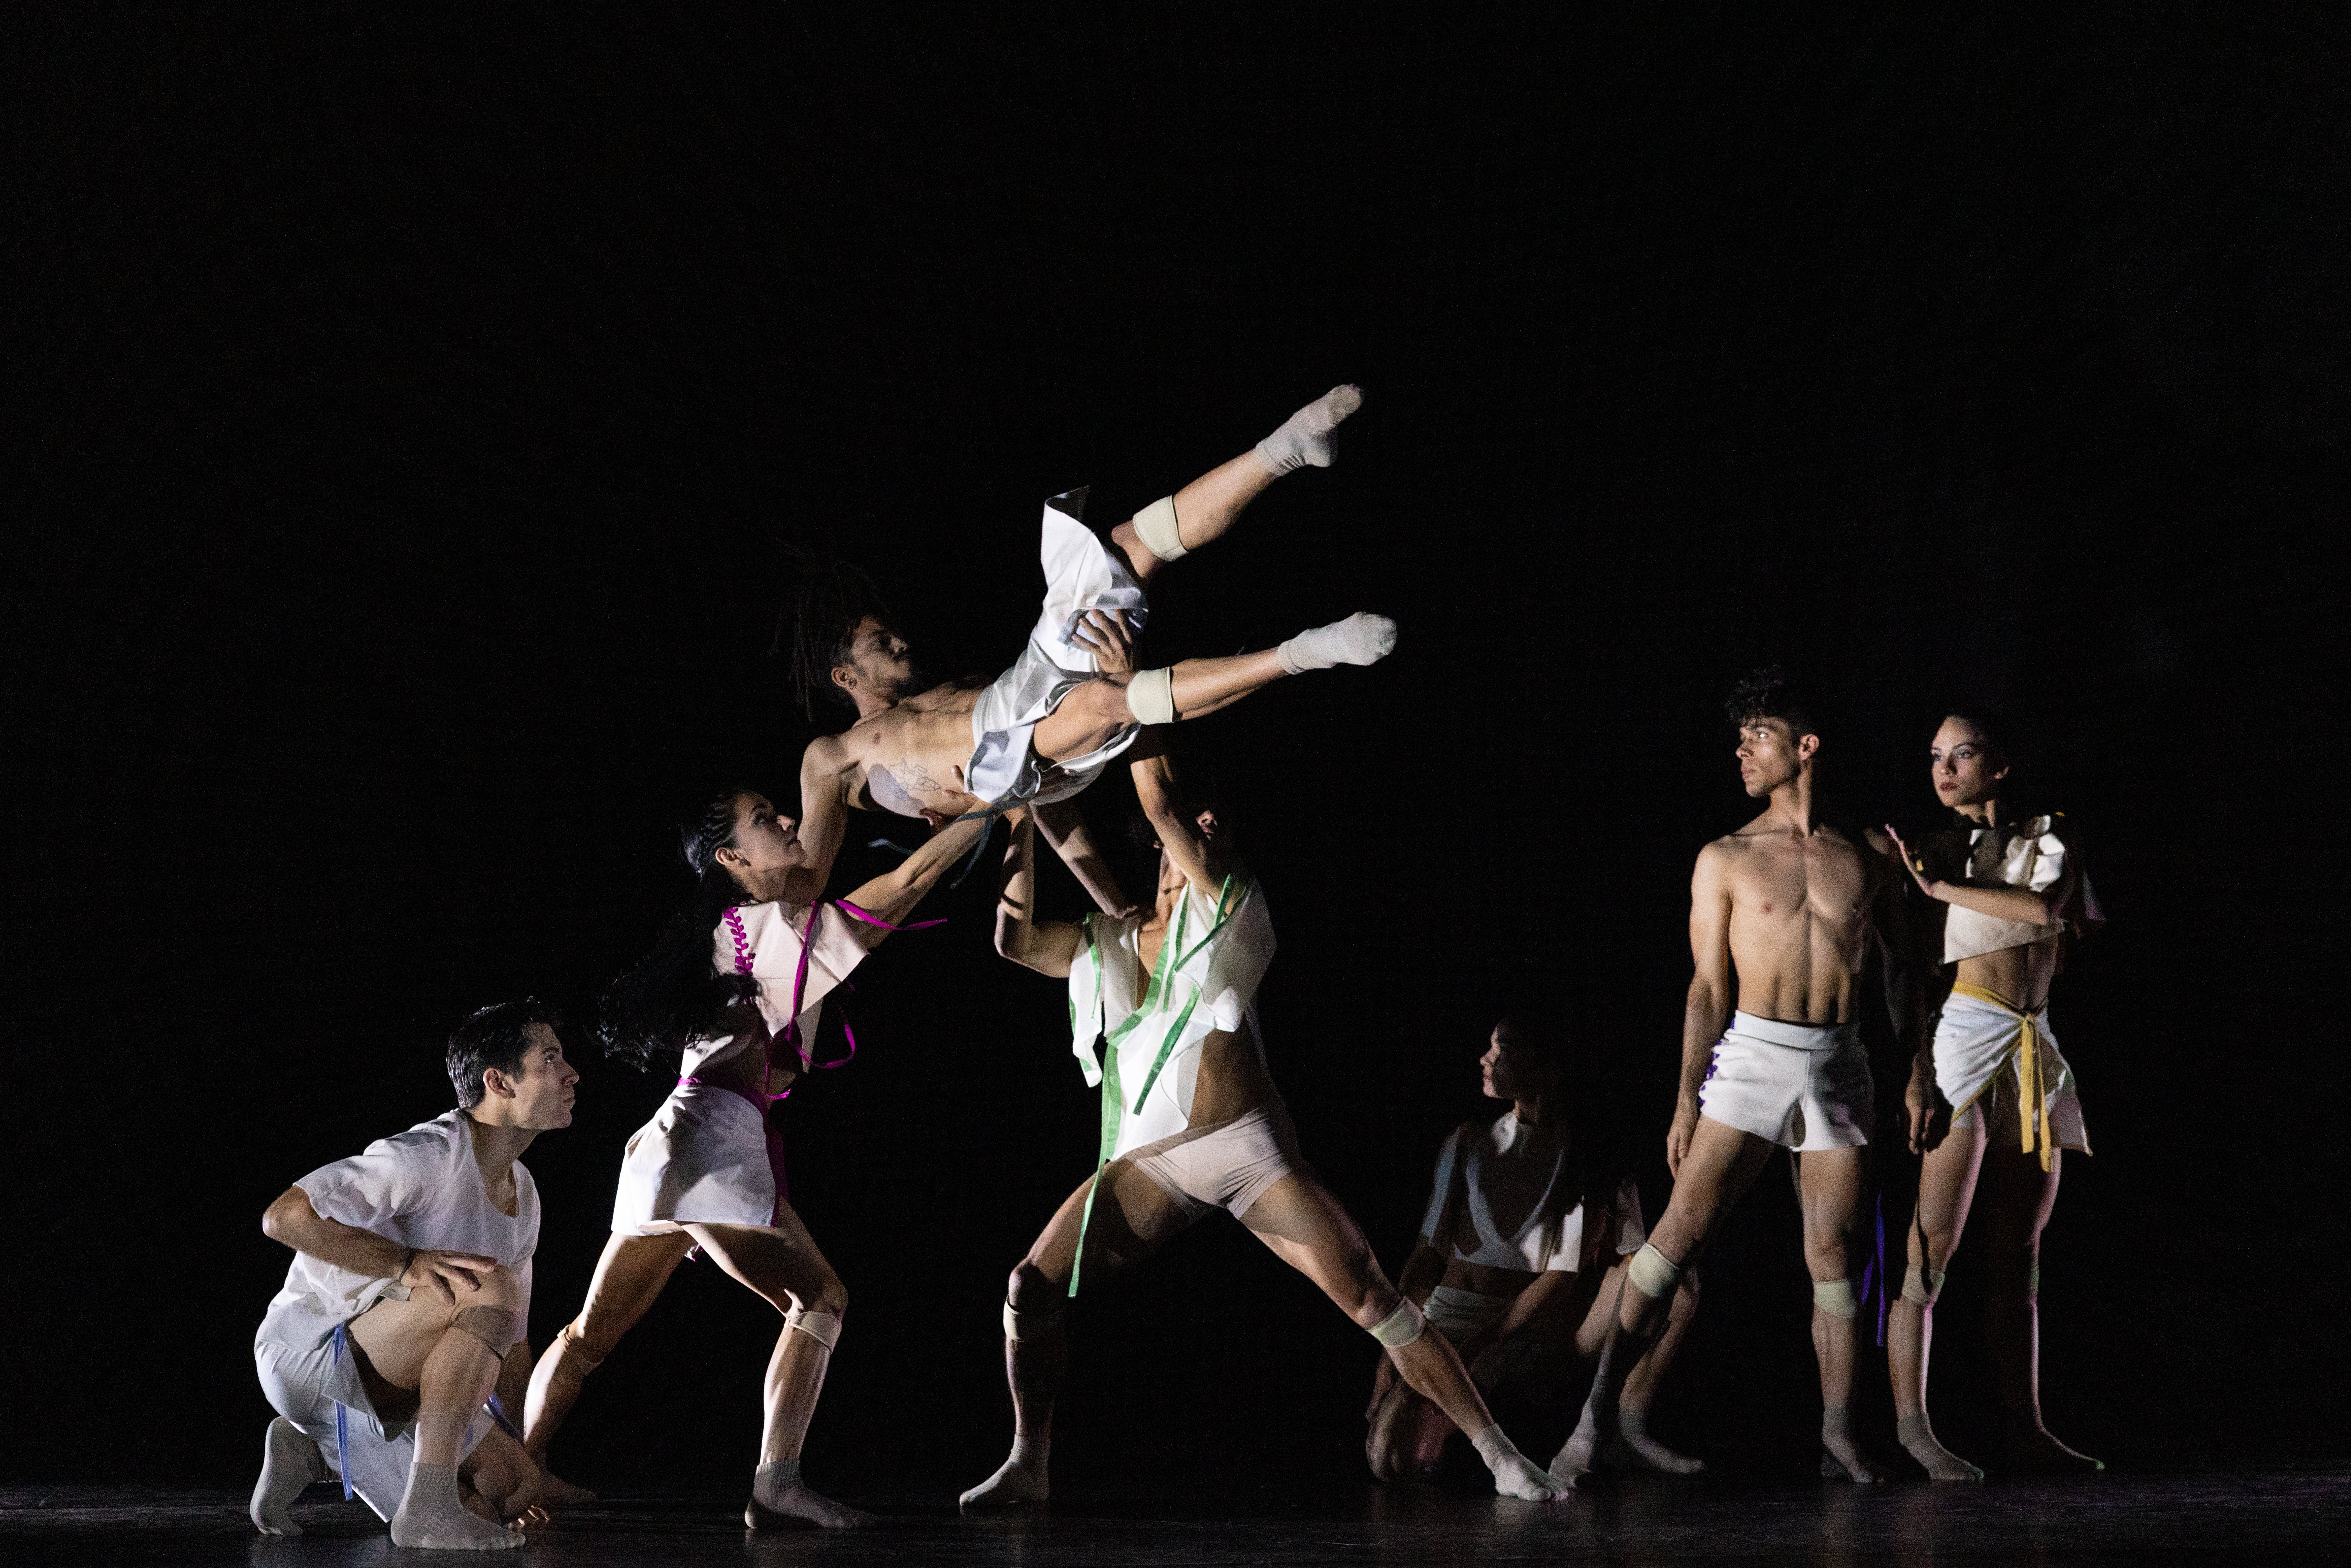 Carlos Acosta’s dance company Acosta Danza show off Cuban dance talent in ‘Spectrum’